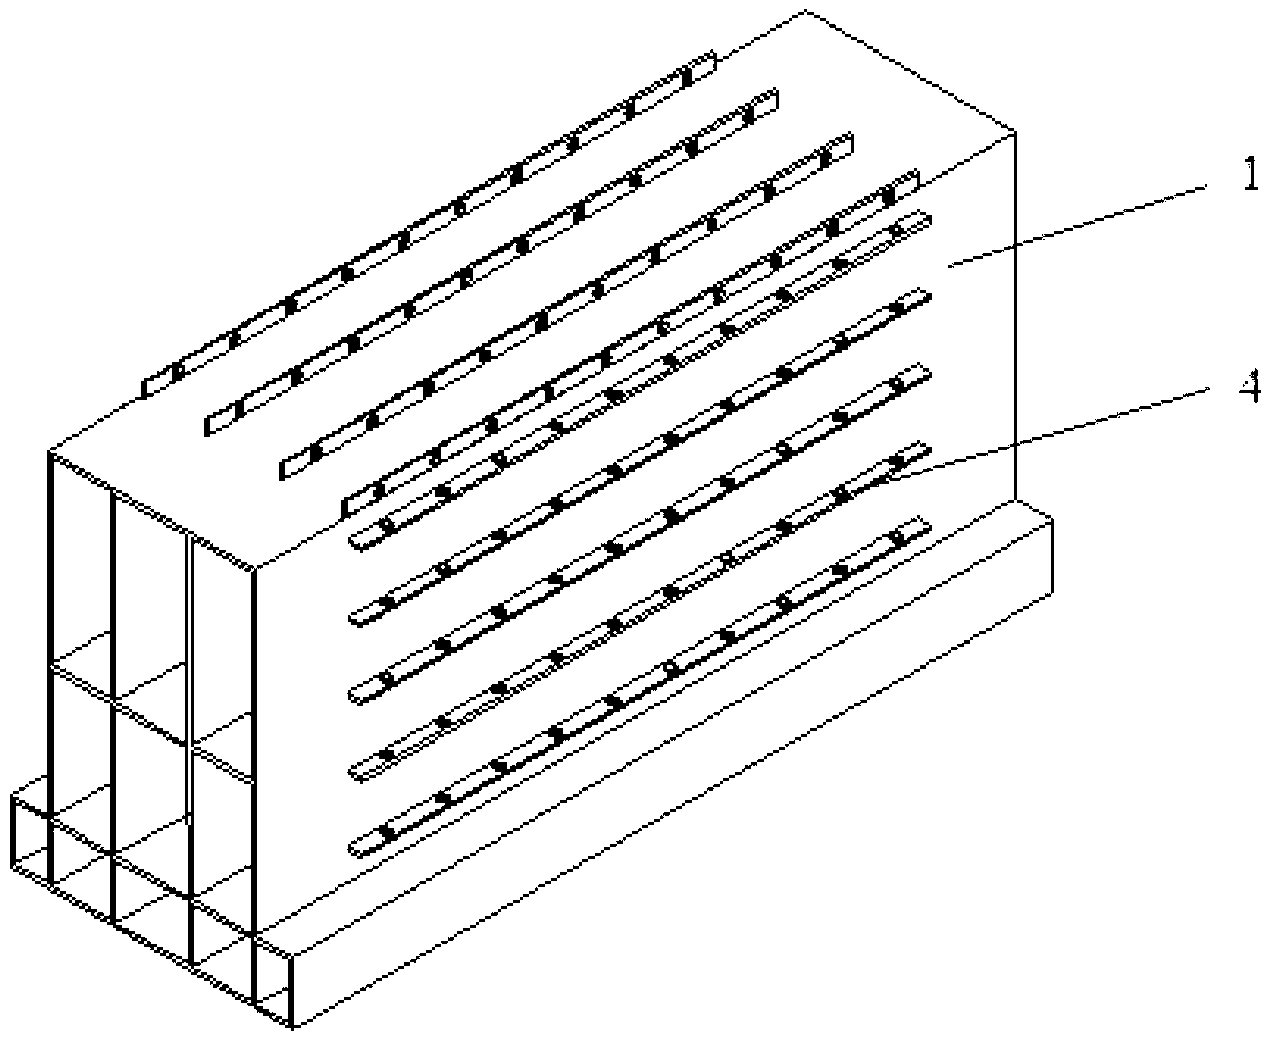 Novel short segment steel box-concrete combined beam